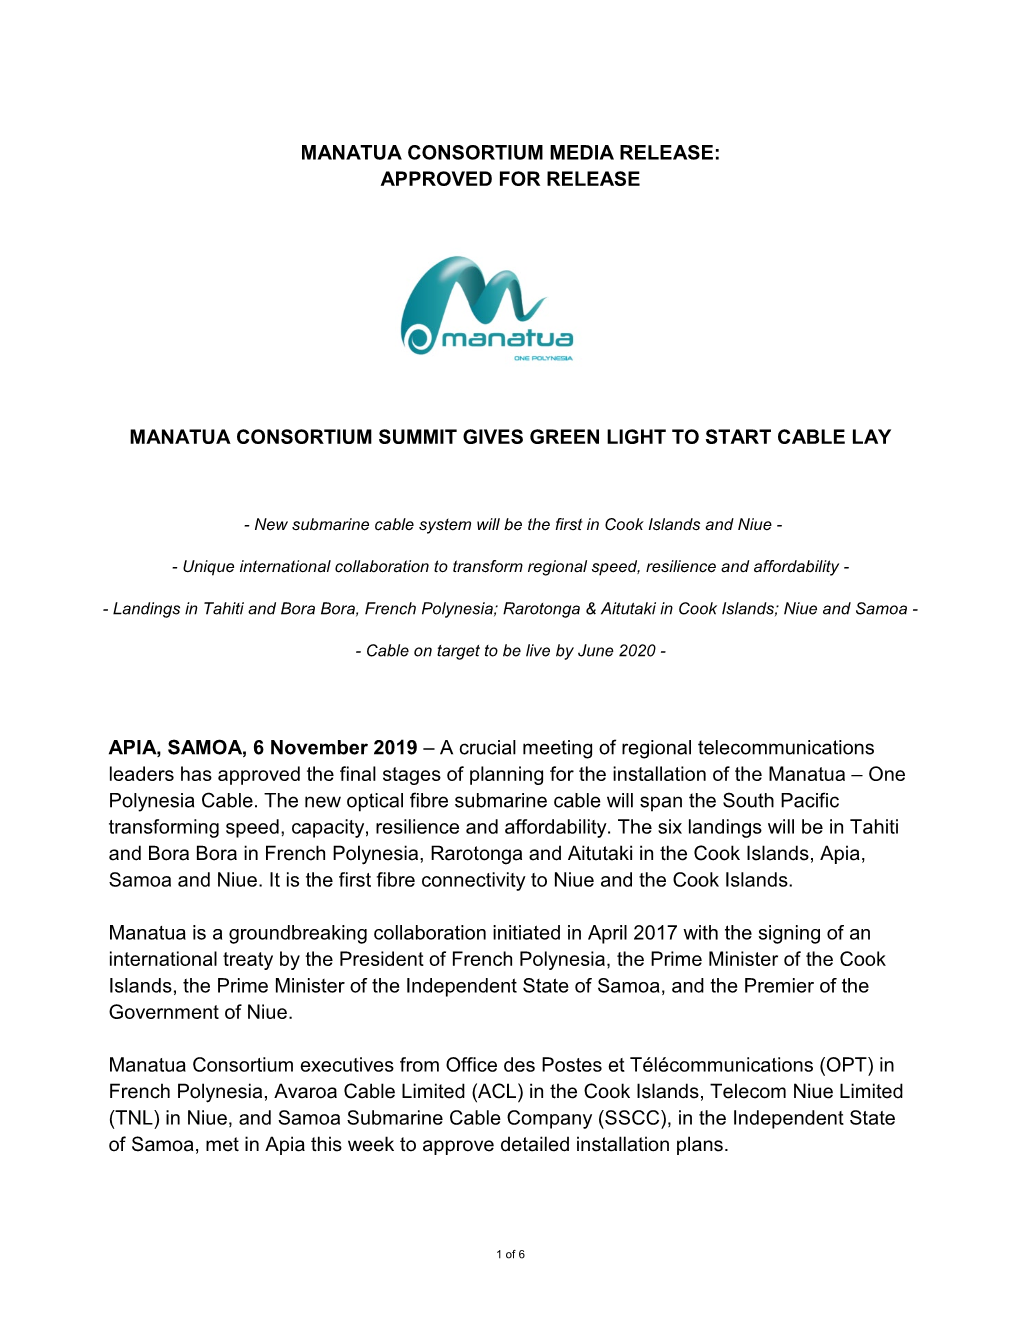 Manatua Consortium Media Release: Approved for Release